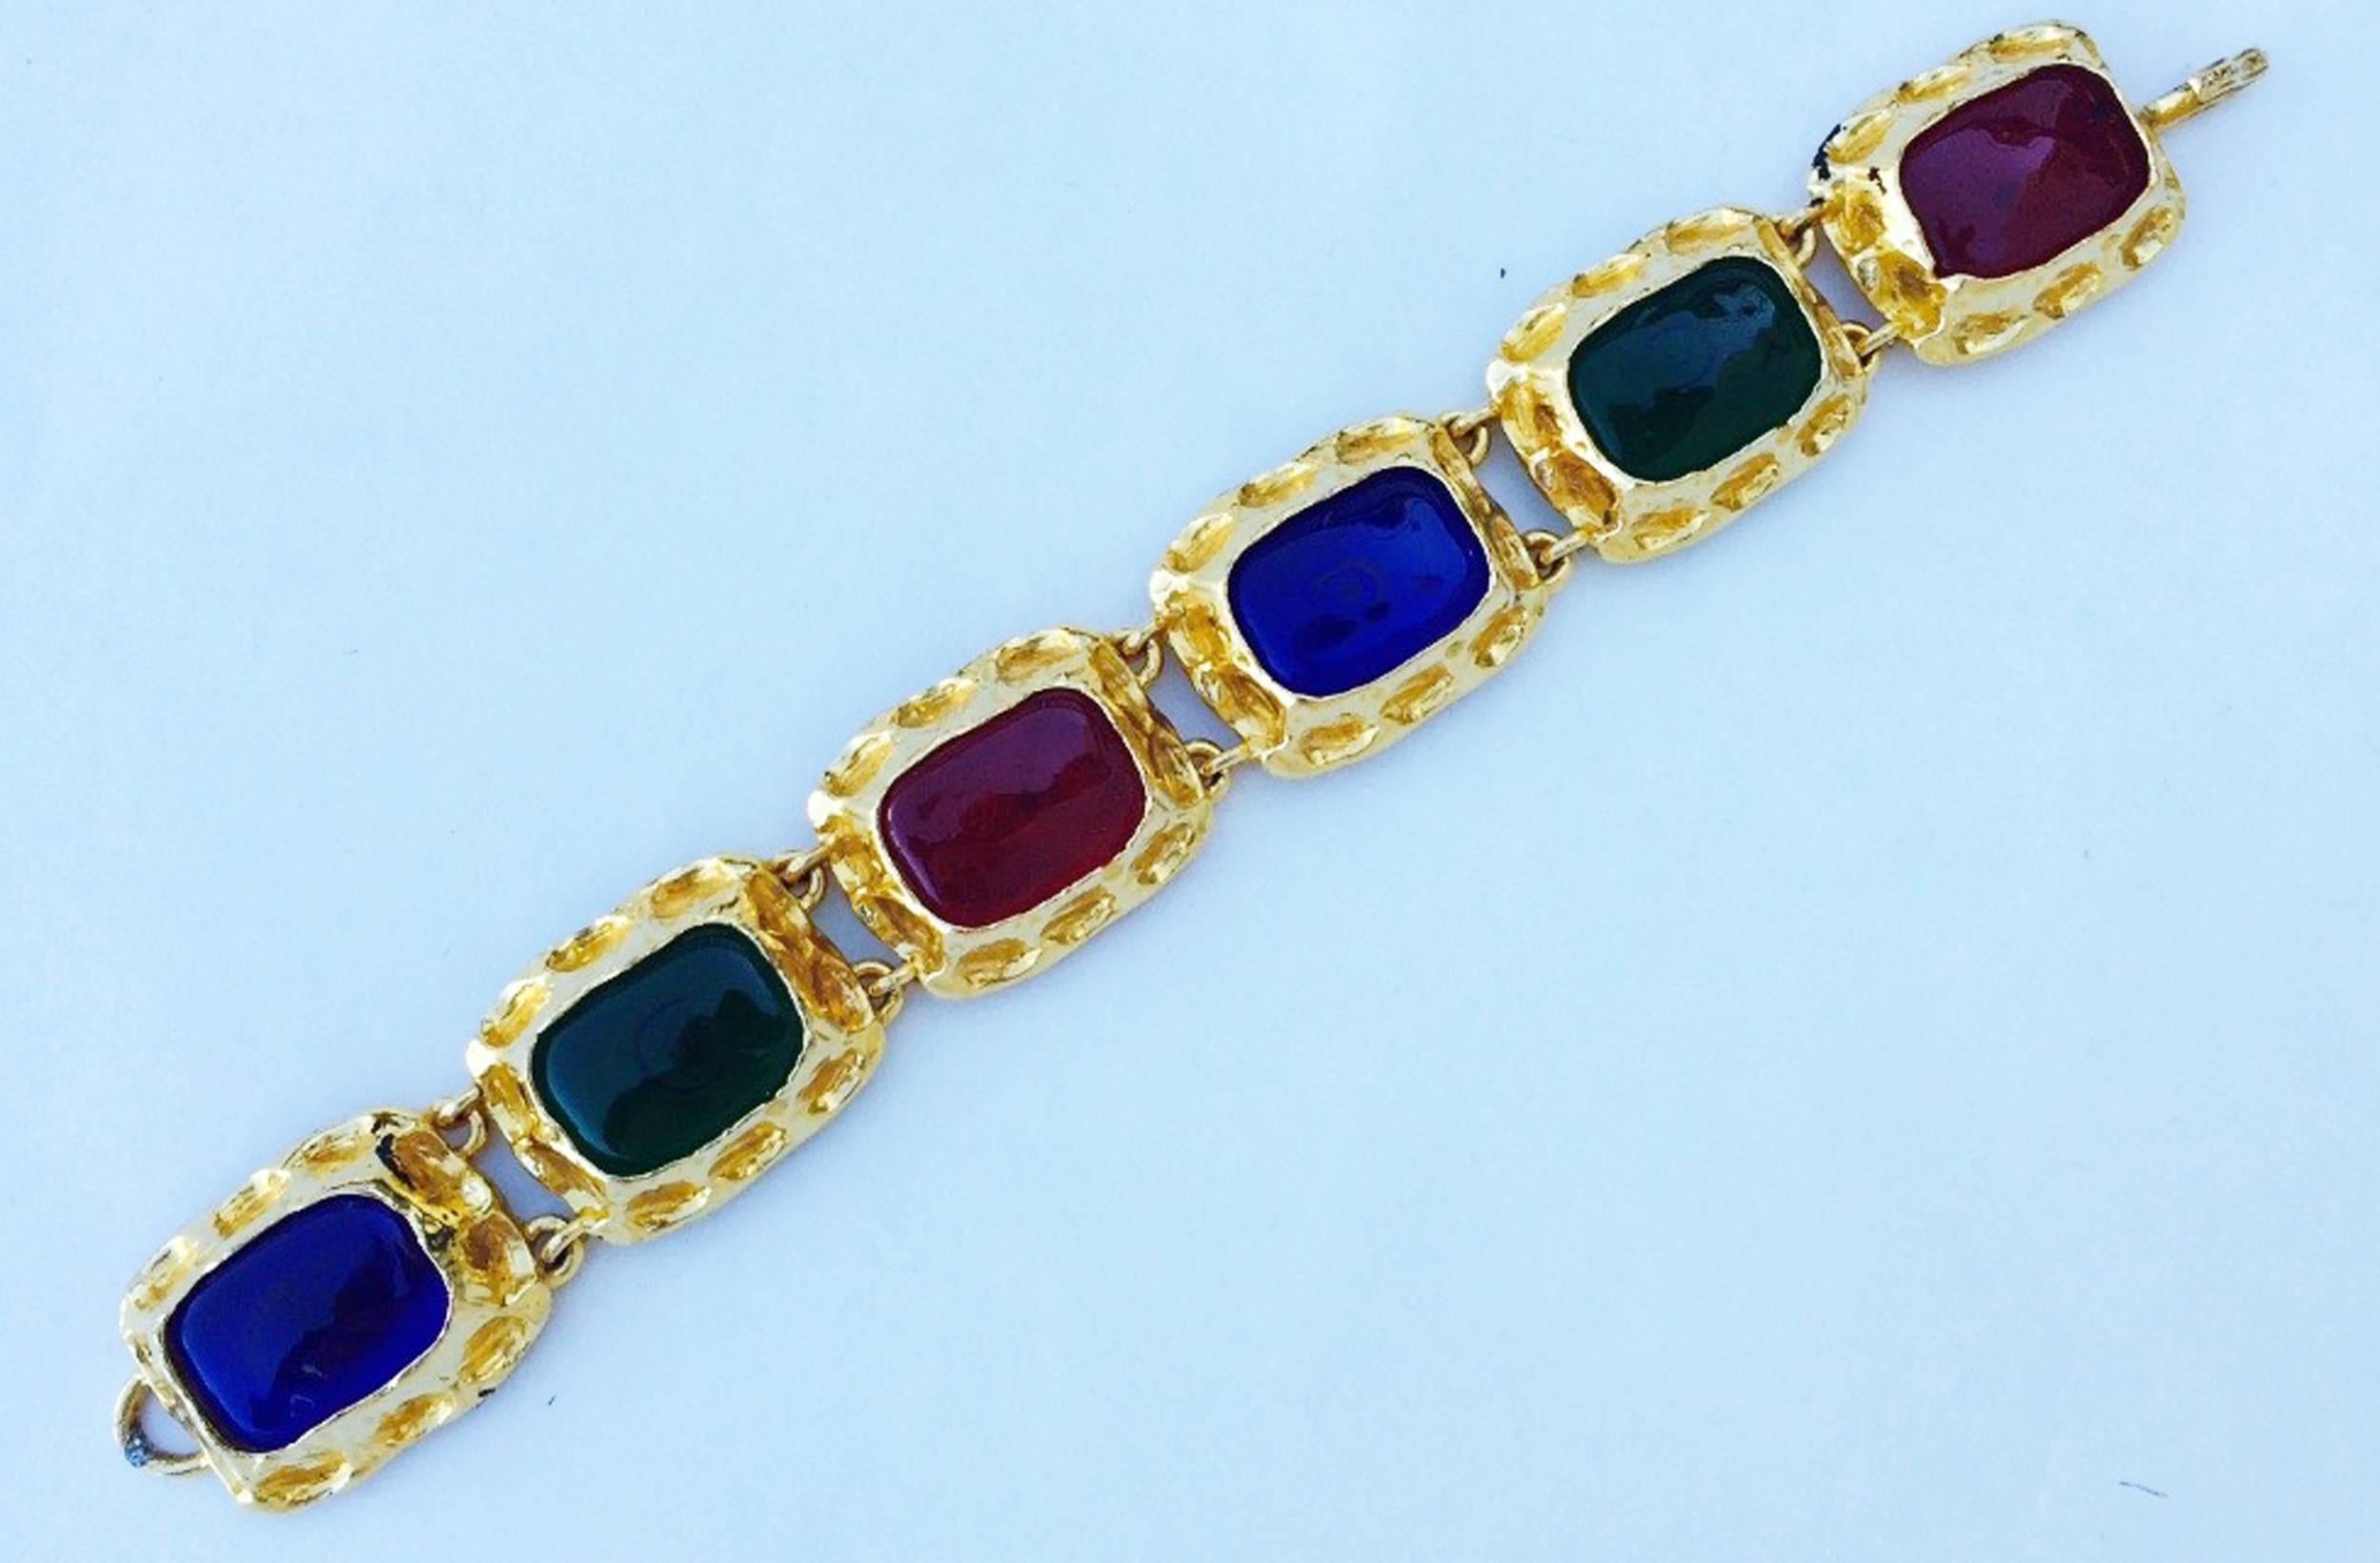 A fine and rare vintage Chanel link bracelet. Signed gilt metal link item features alternating blue, red, green Maison Gripoix poured glass 